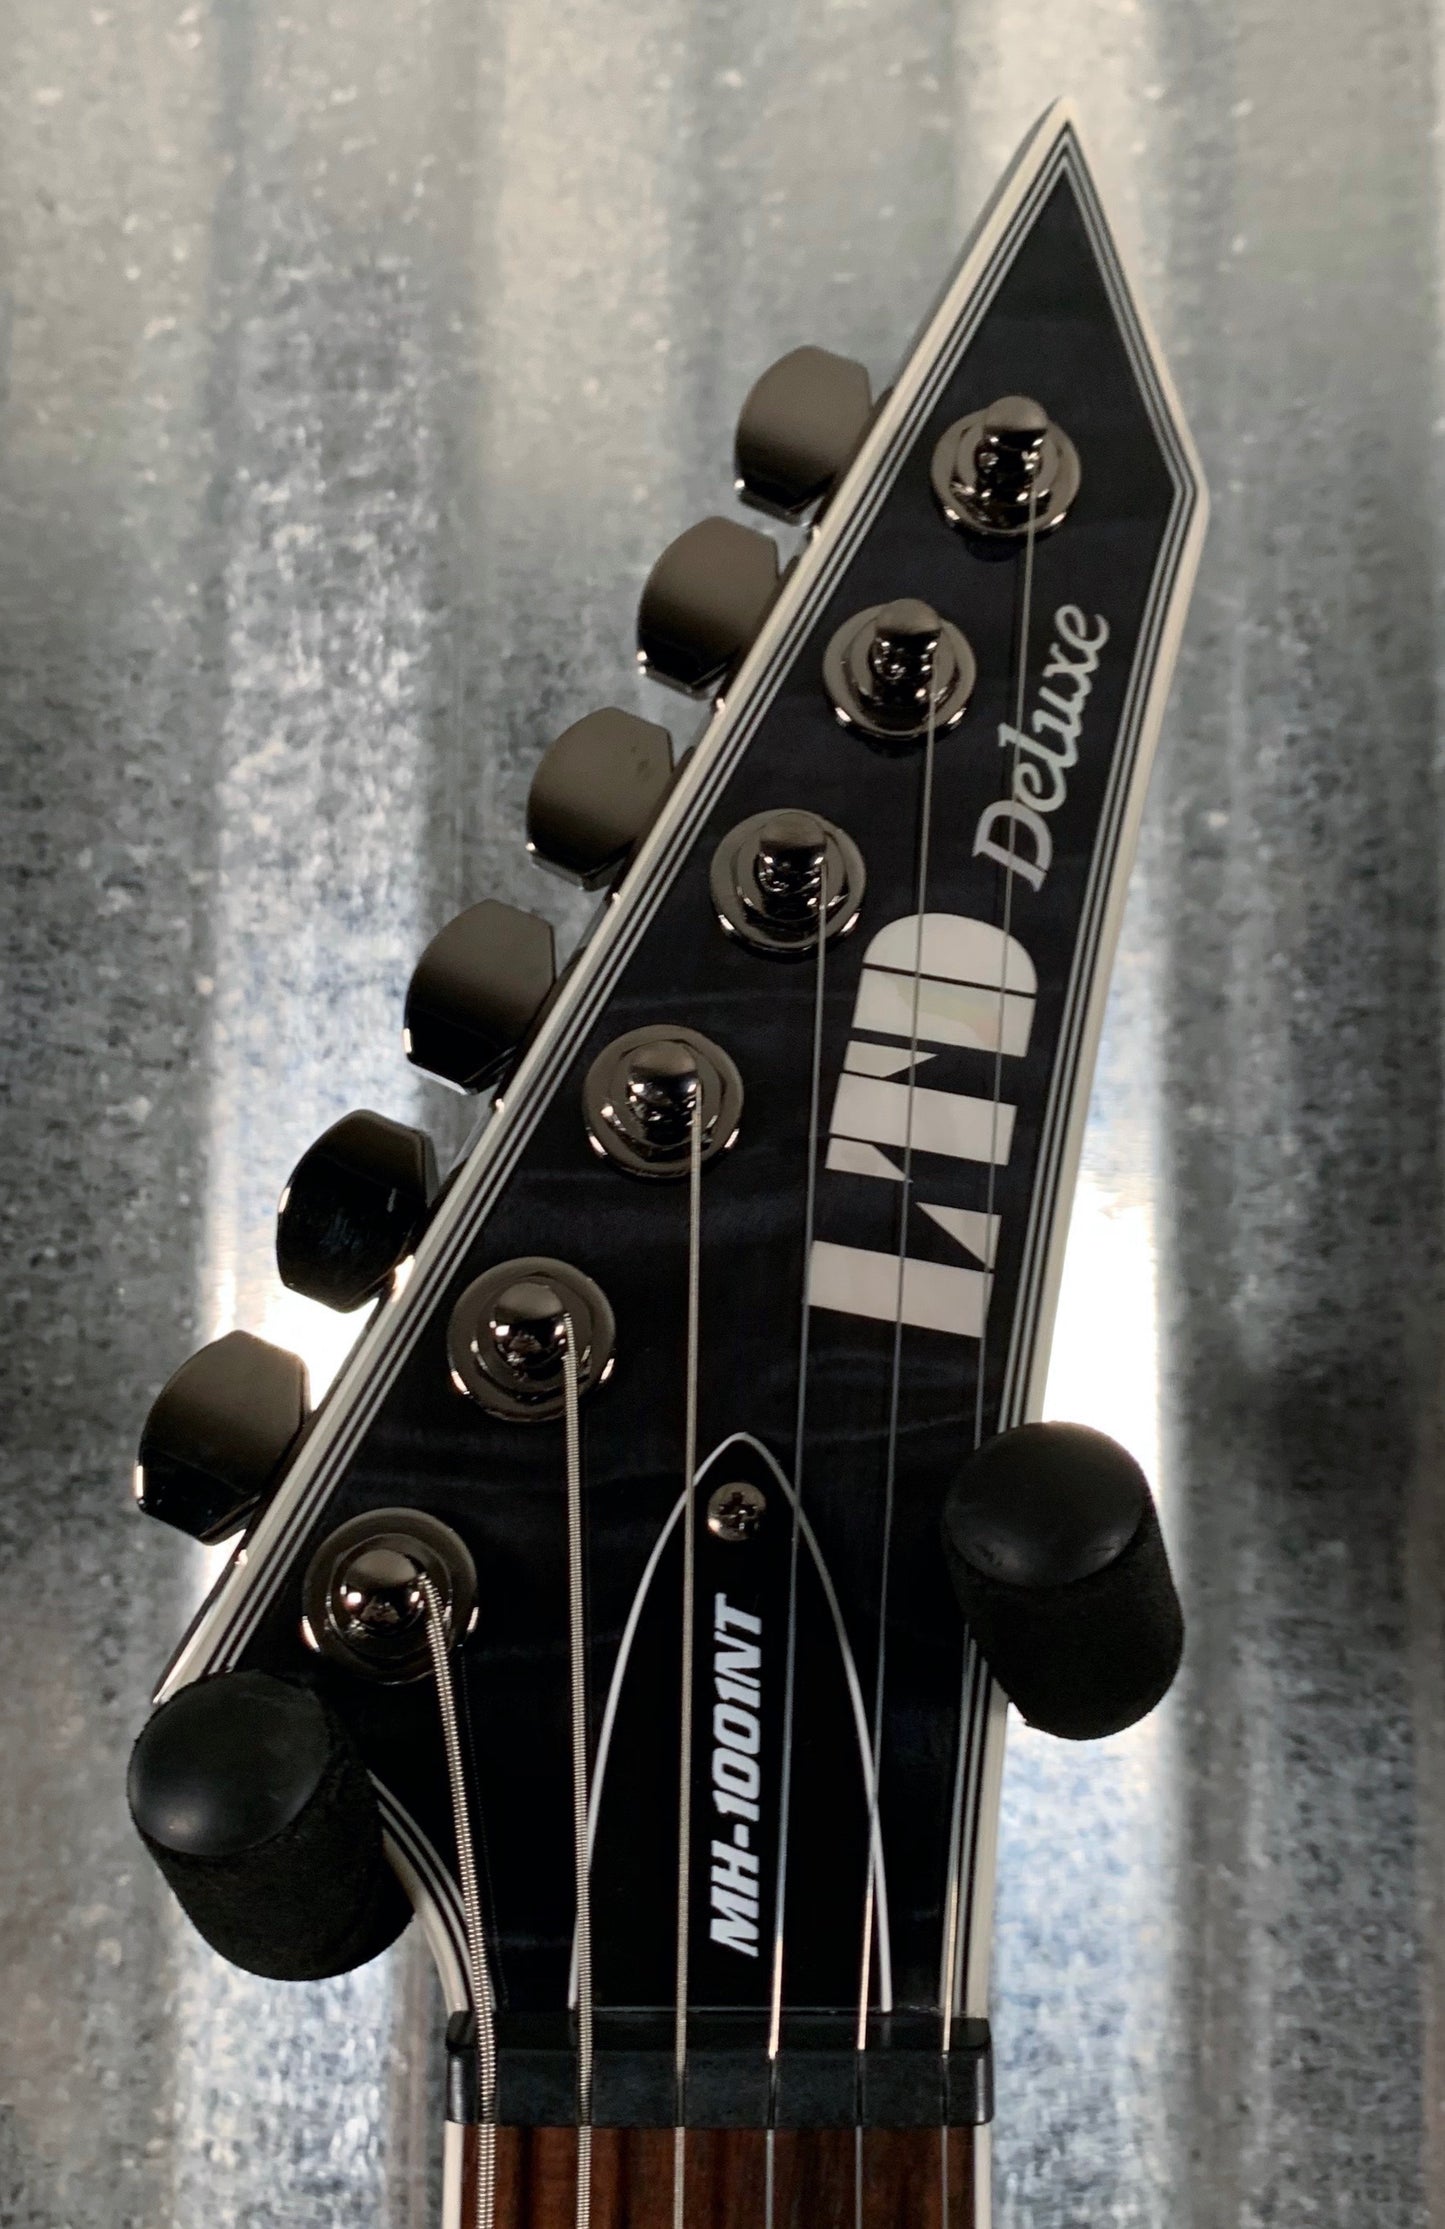 ESP LTD MH-1001NT See Thru Black EMG Guitar & Bag LMH1001NTSTBLK #1256 Demo